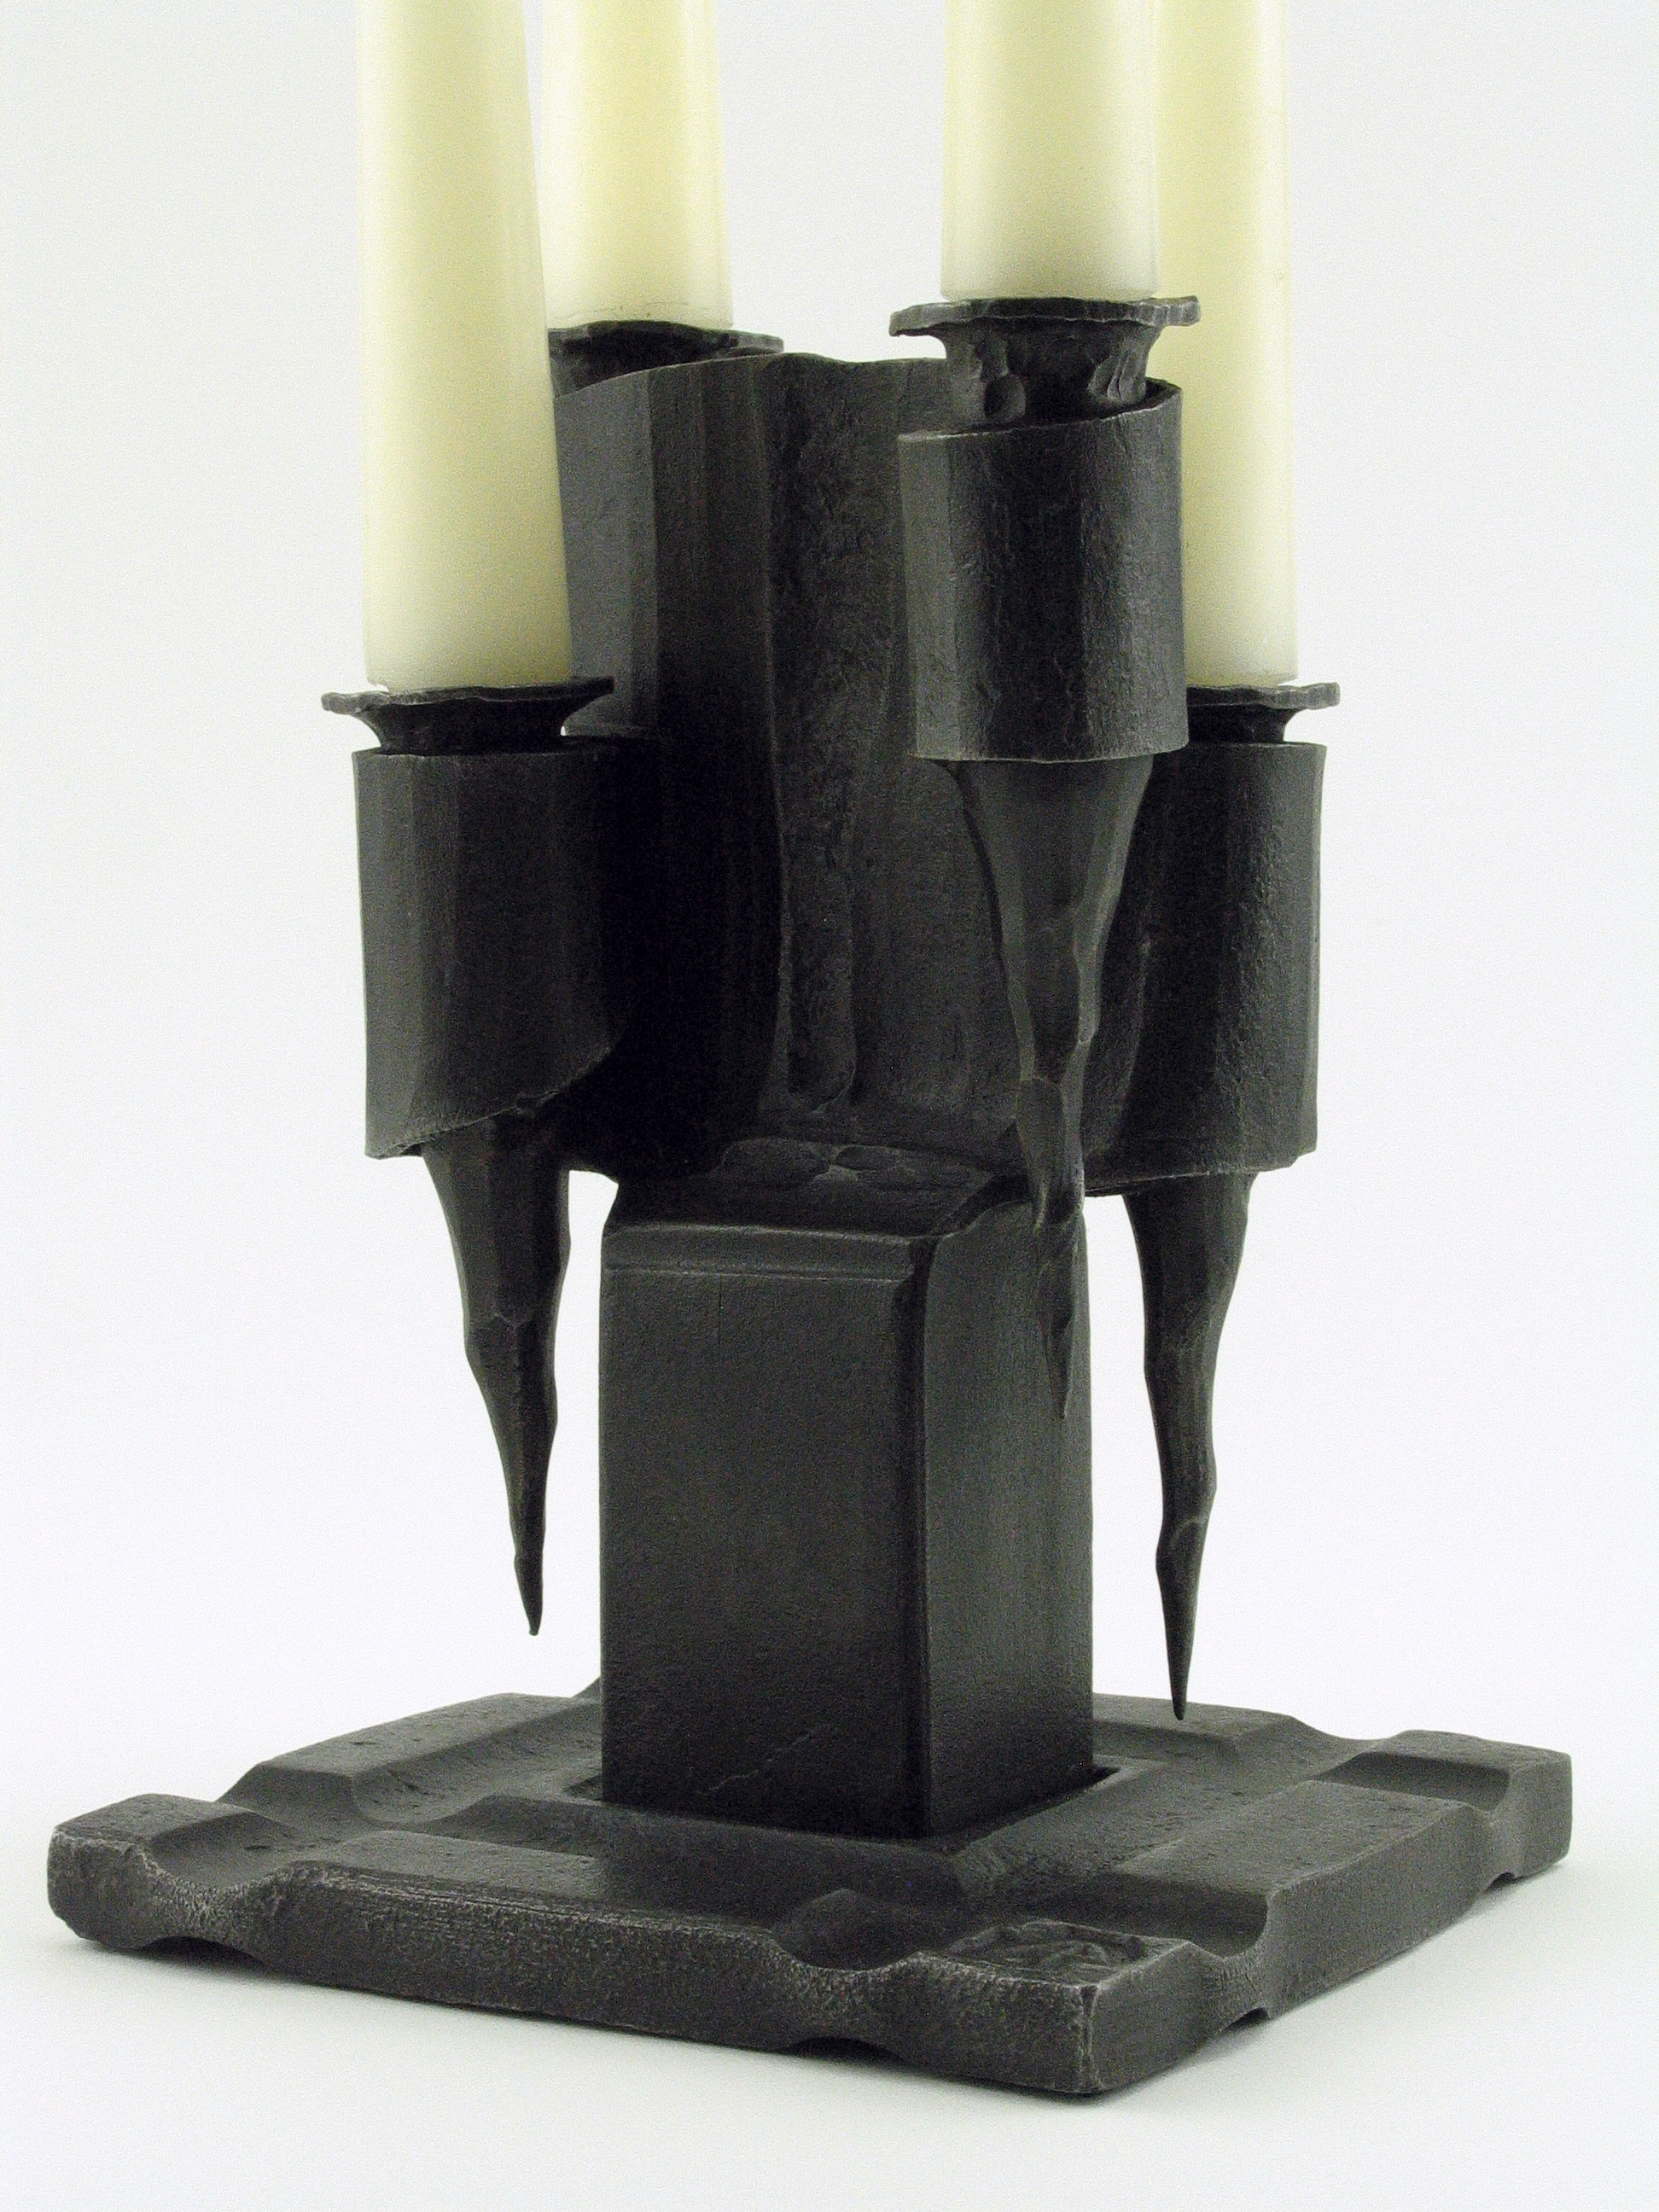  Curling Iron II candlestick, steel, 2012 